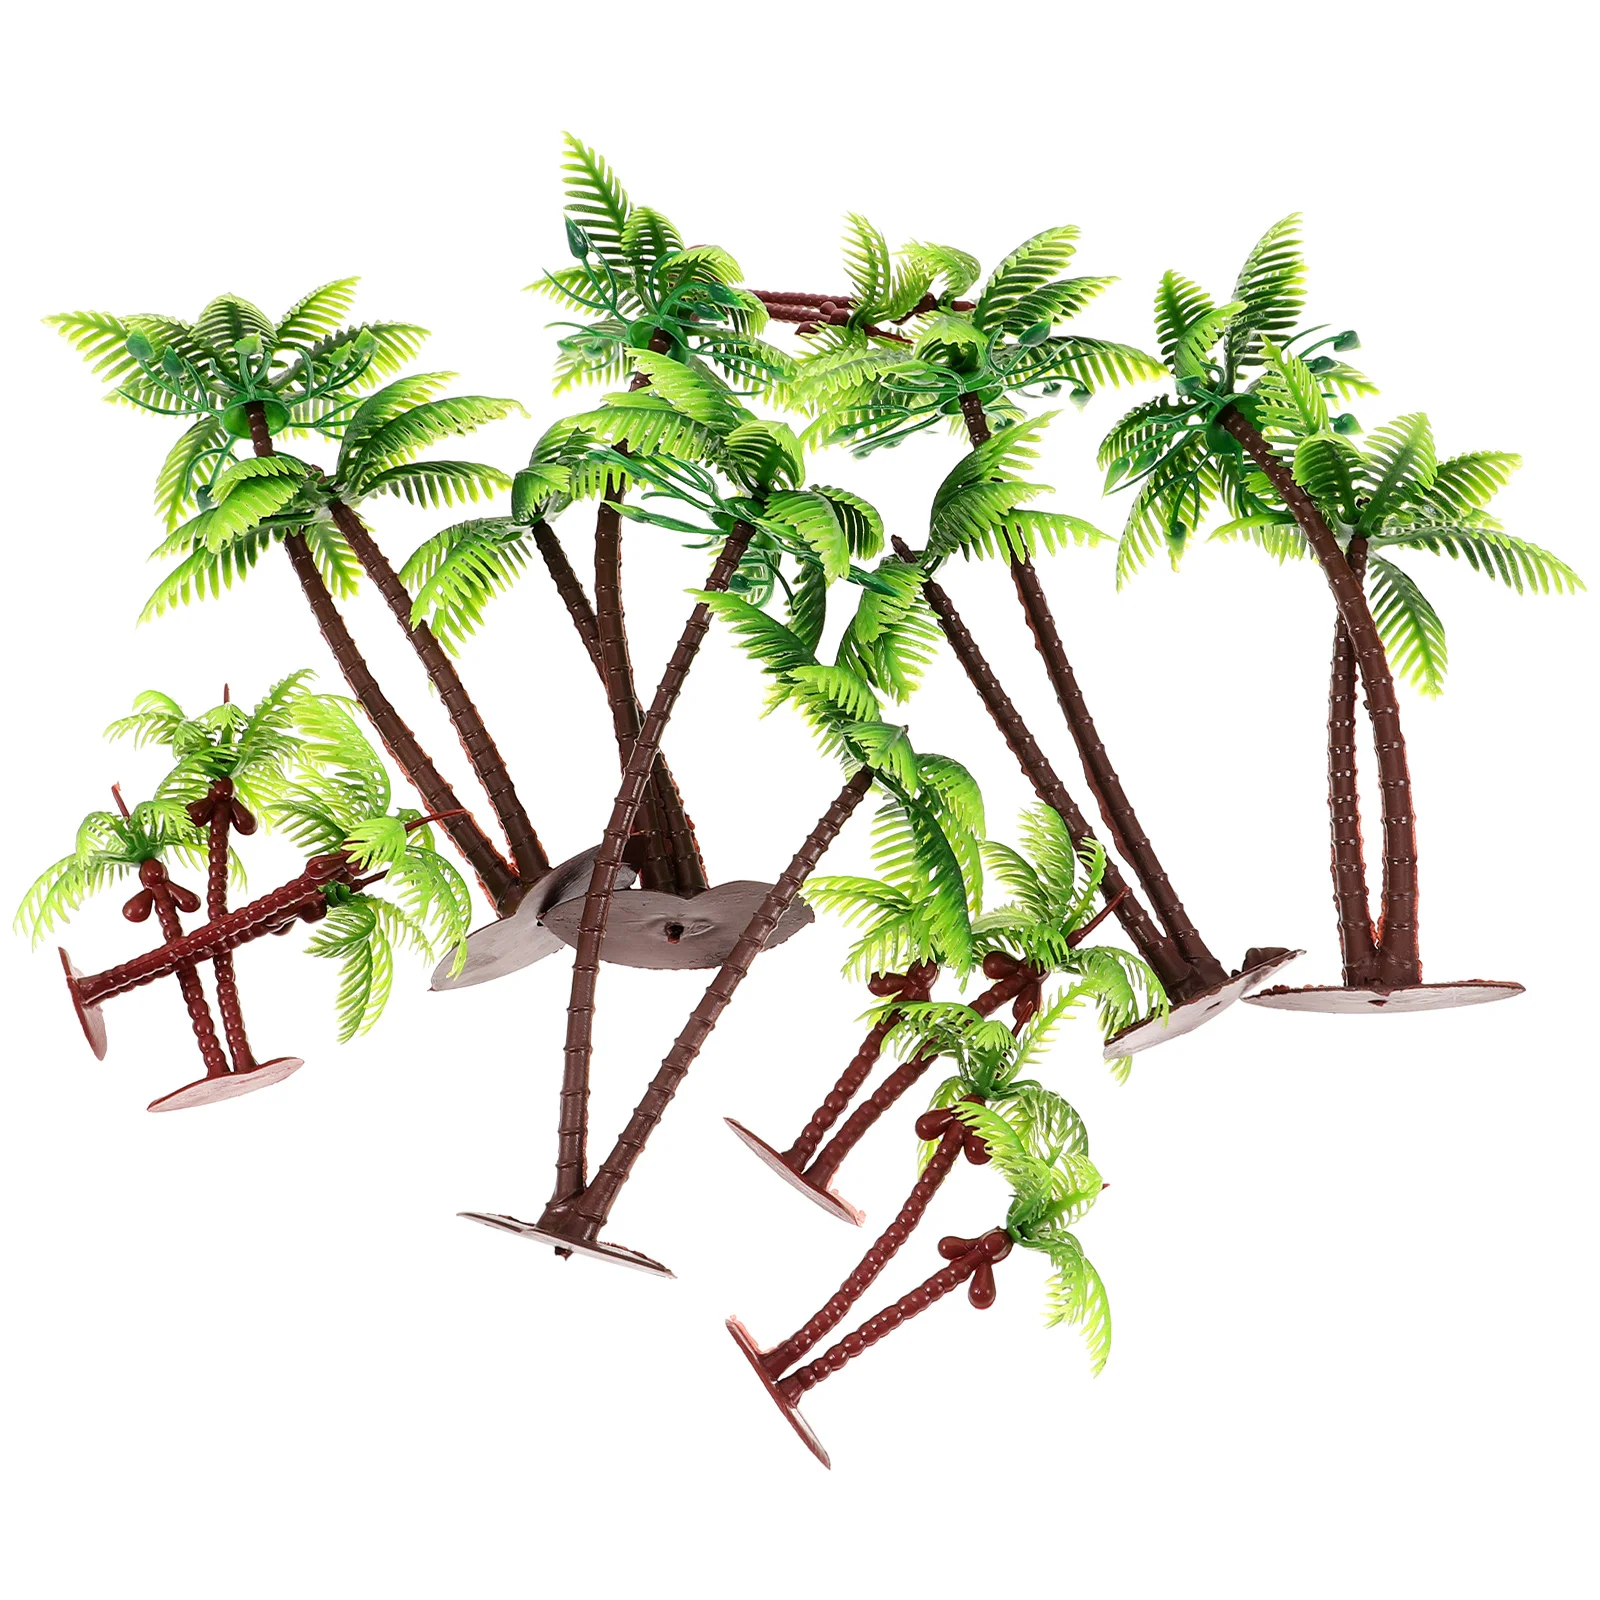 

10pcs Train Scenery Landscape Trees Miniature Palm Trees Architecture Building DIY Trees